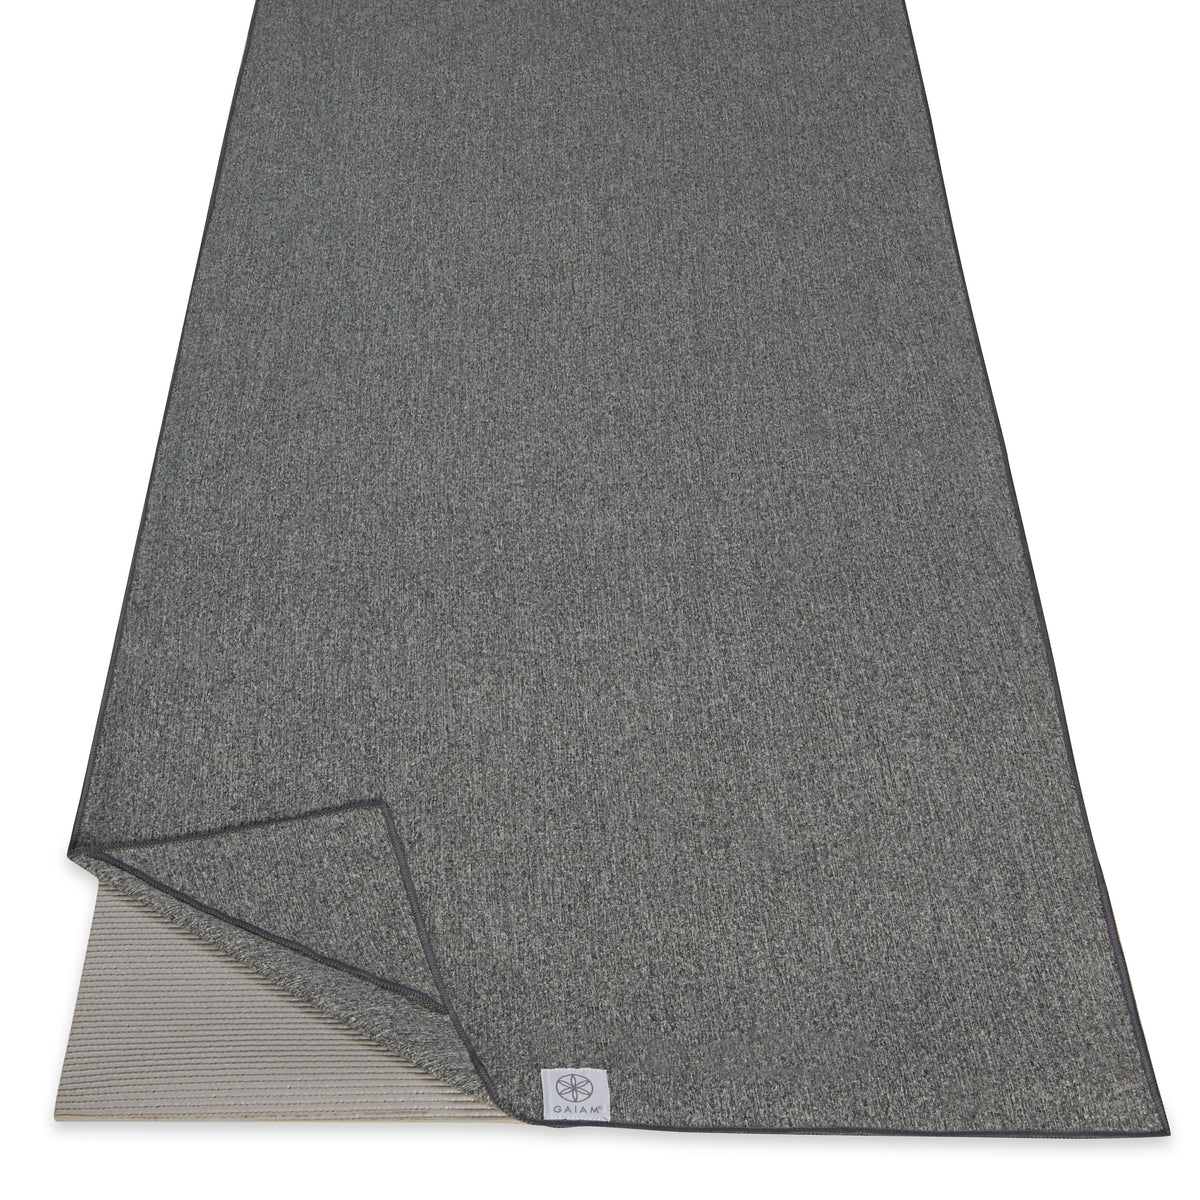 Gaiam Active Dry Yoga Mat Towel Black on mat corner folded back